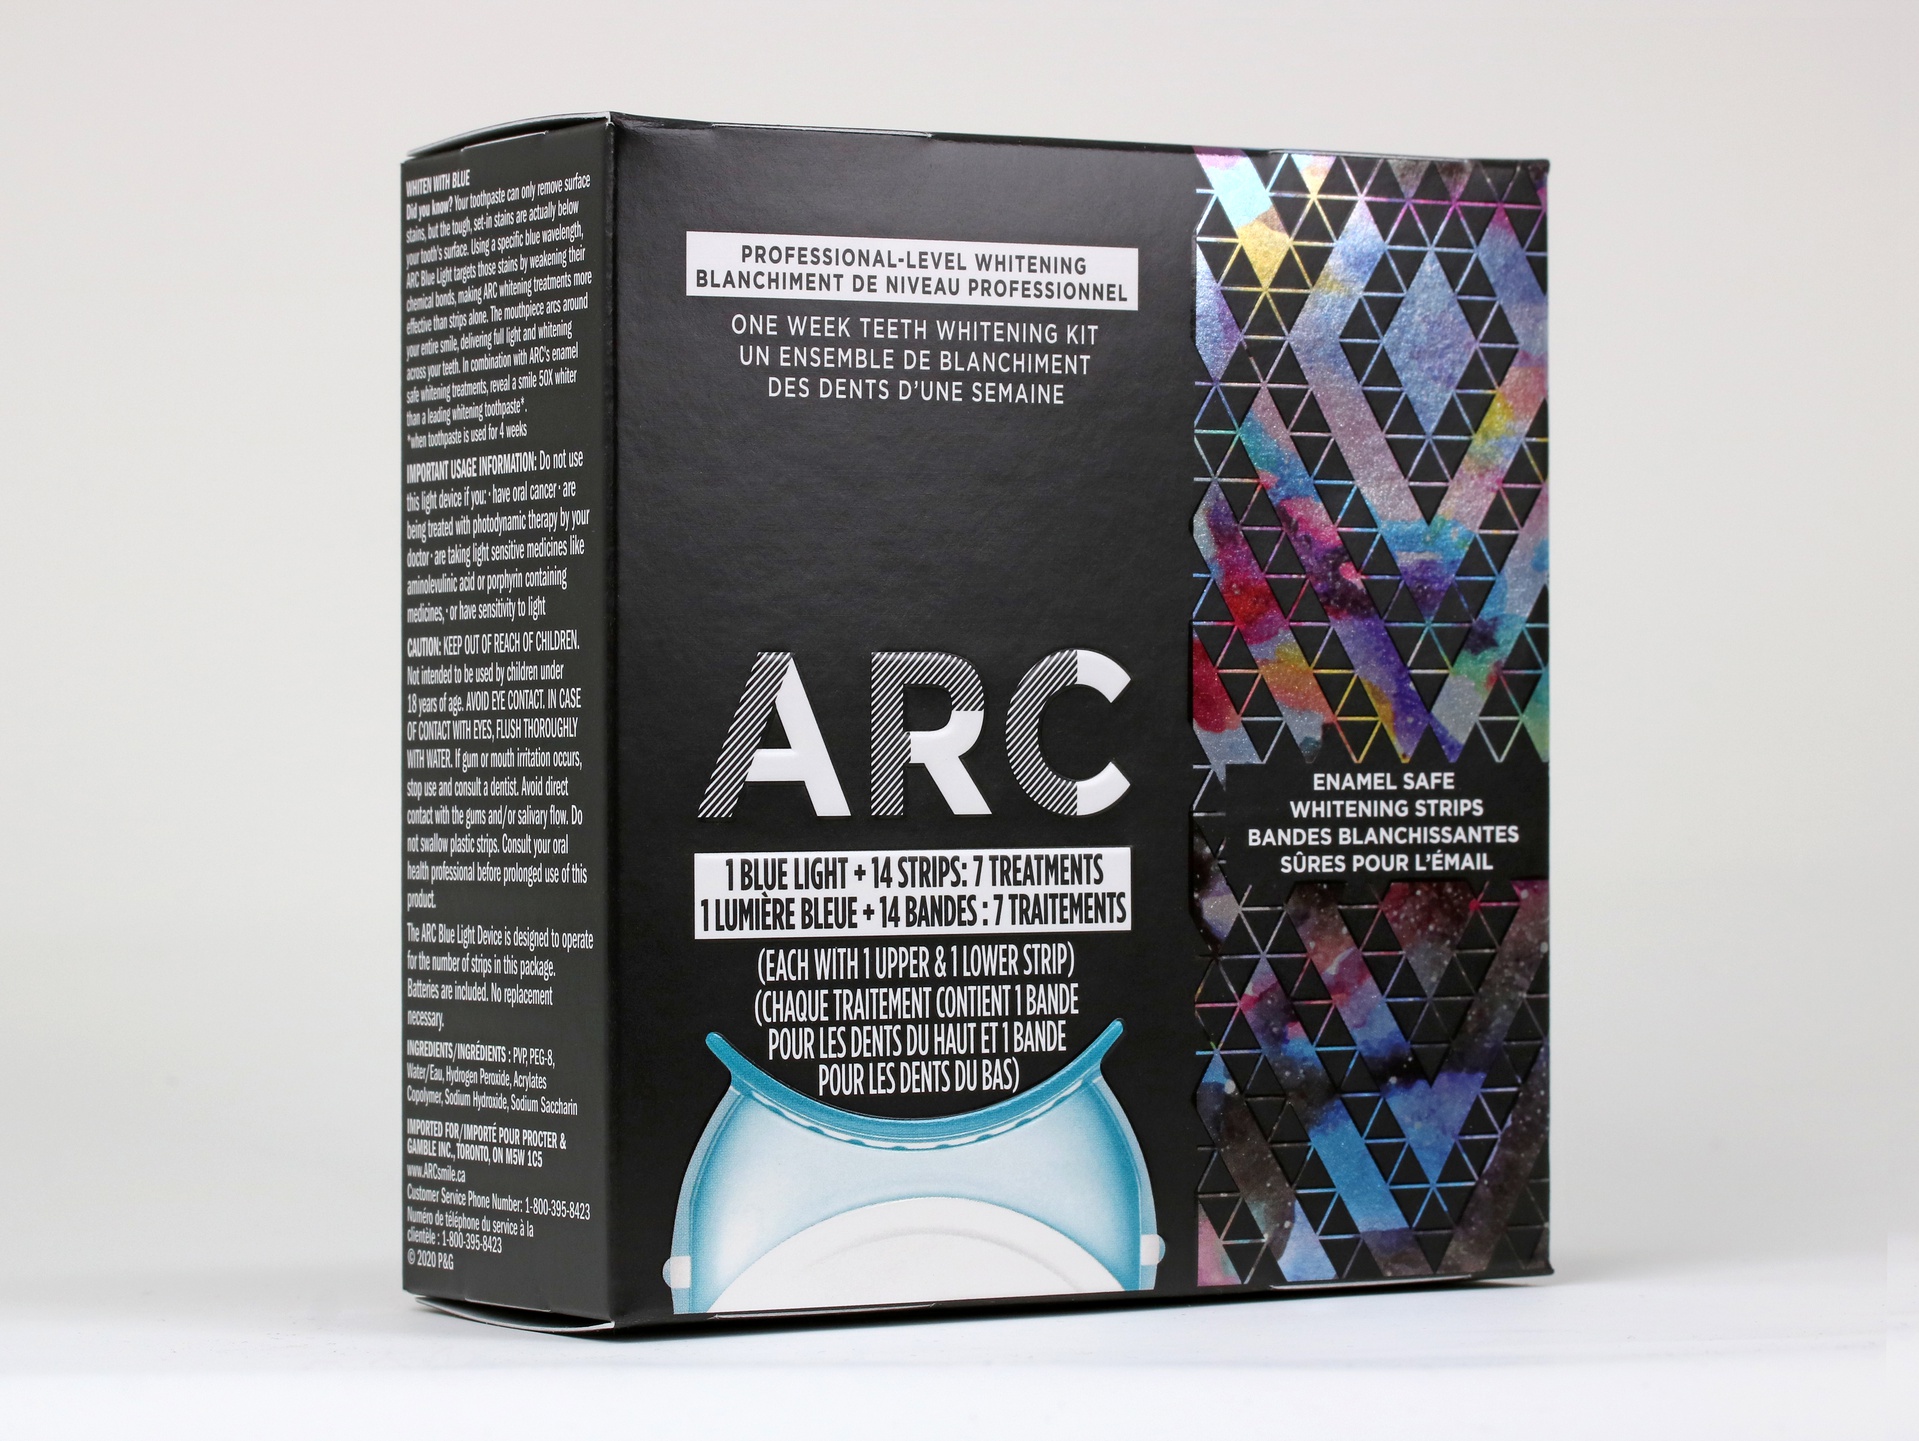 ARC Blue Light Teeth Whitening Kit packaging